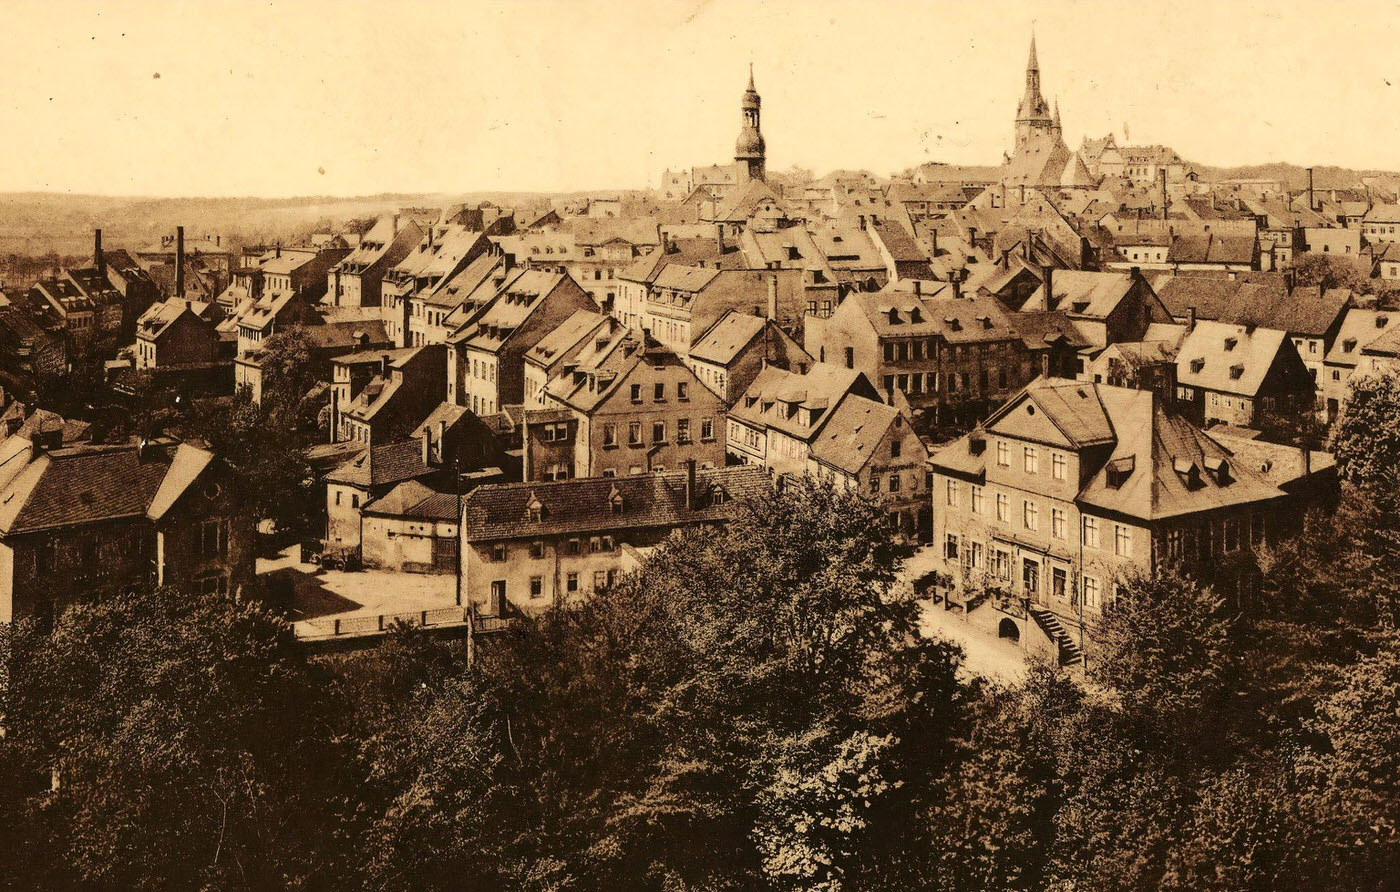 Castles in Landkreis Zwickau, Waldenburg, 1900s, Germany.